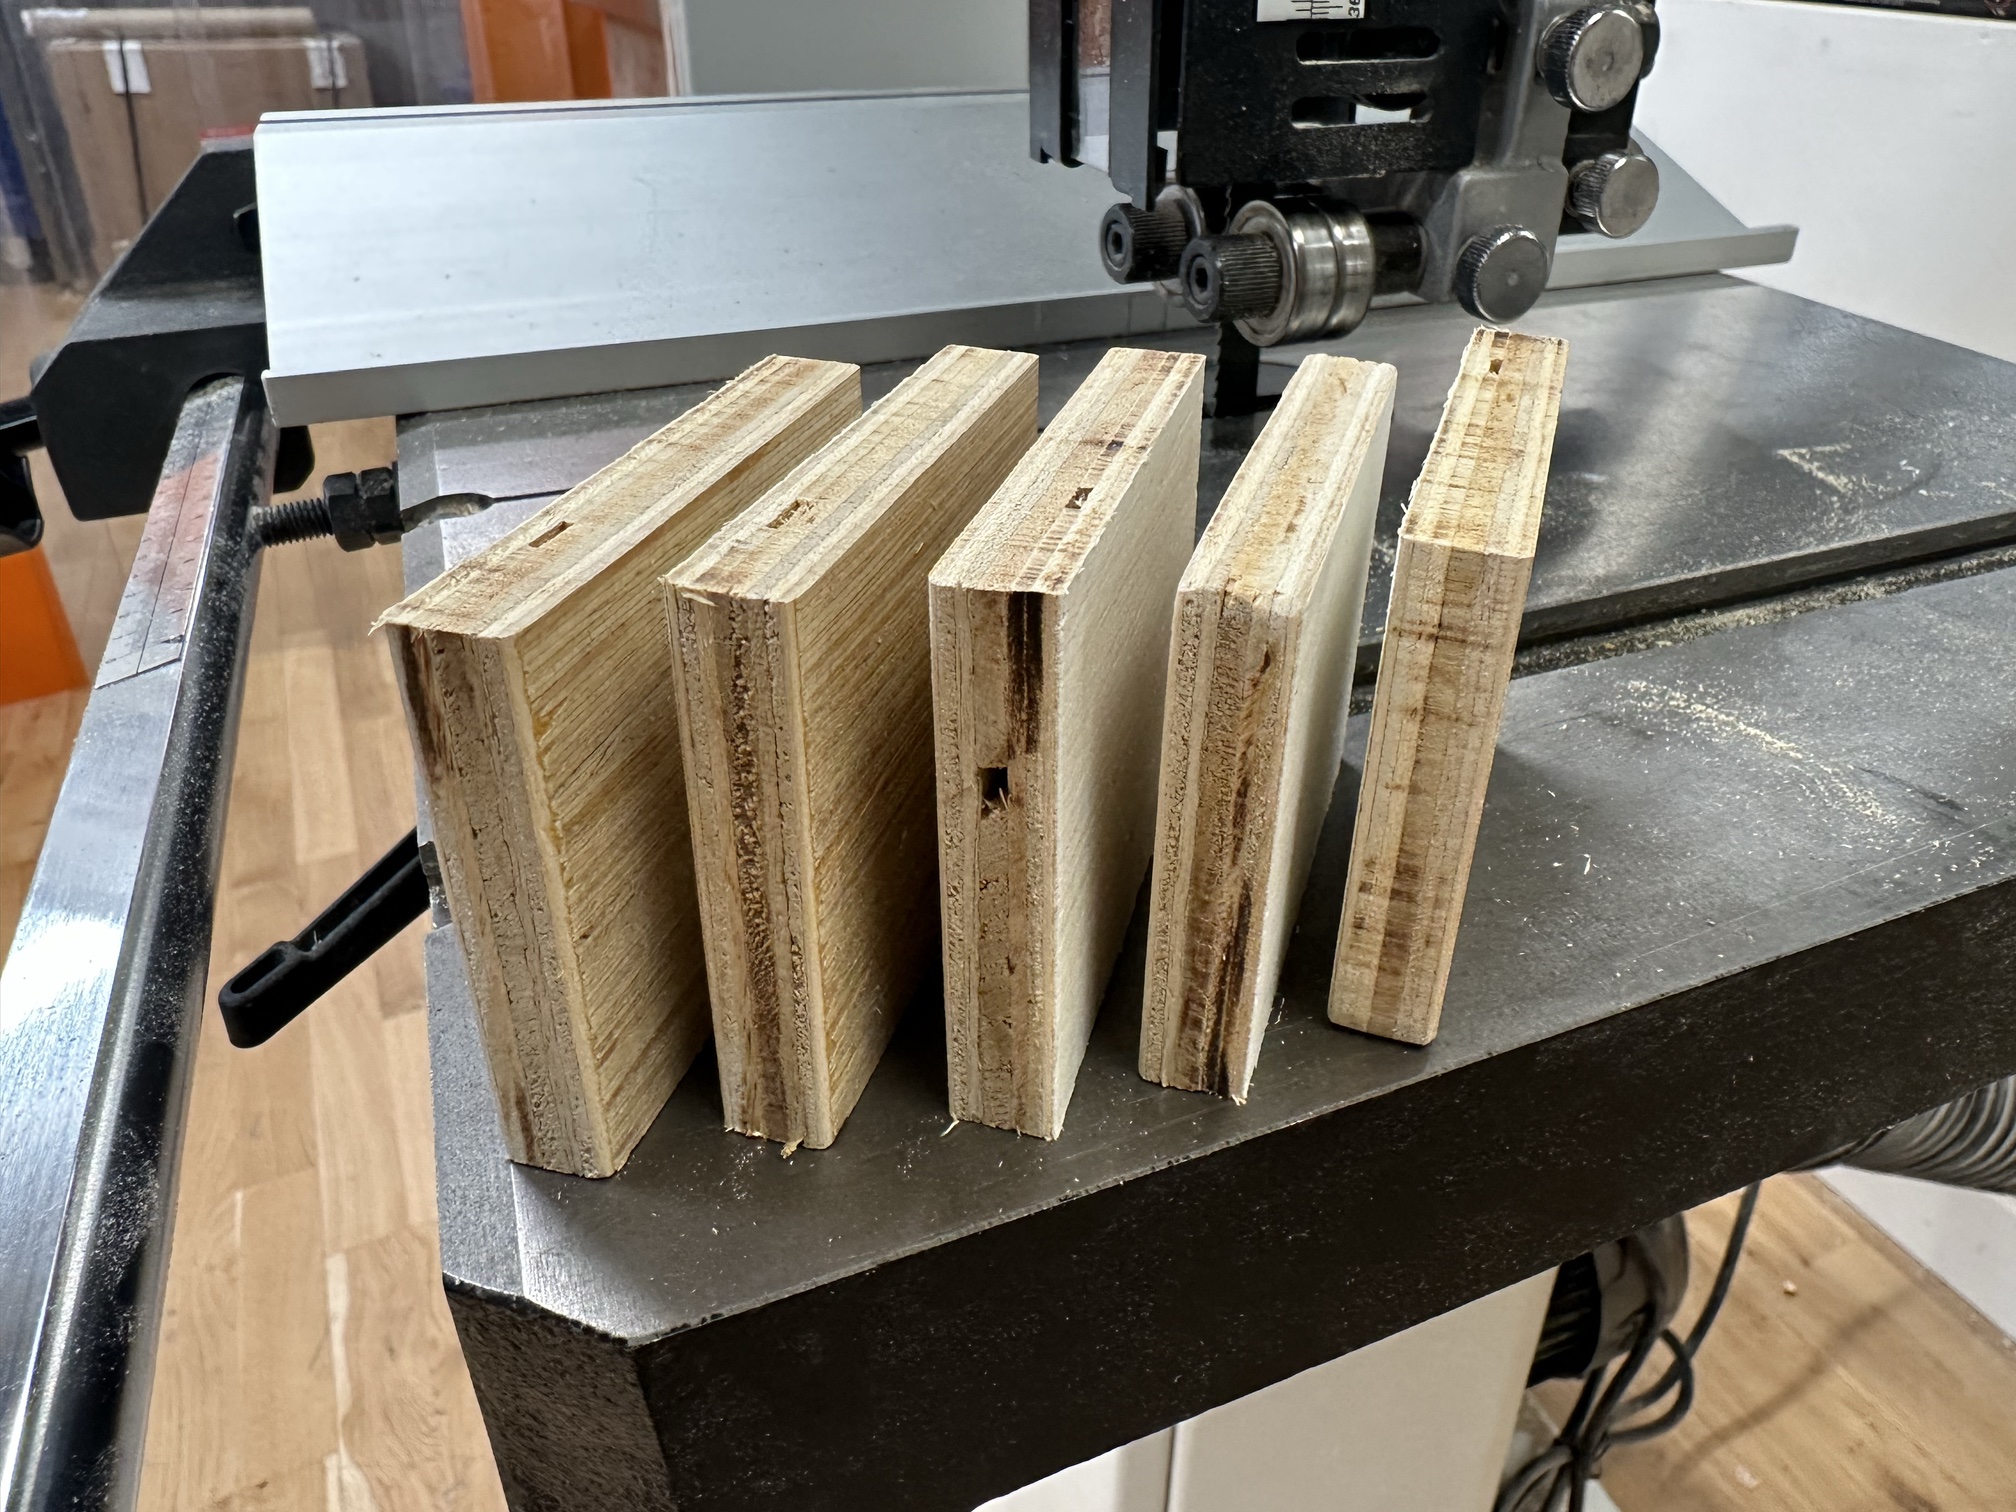 Cut wood pieces